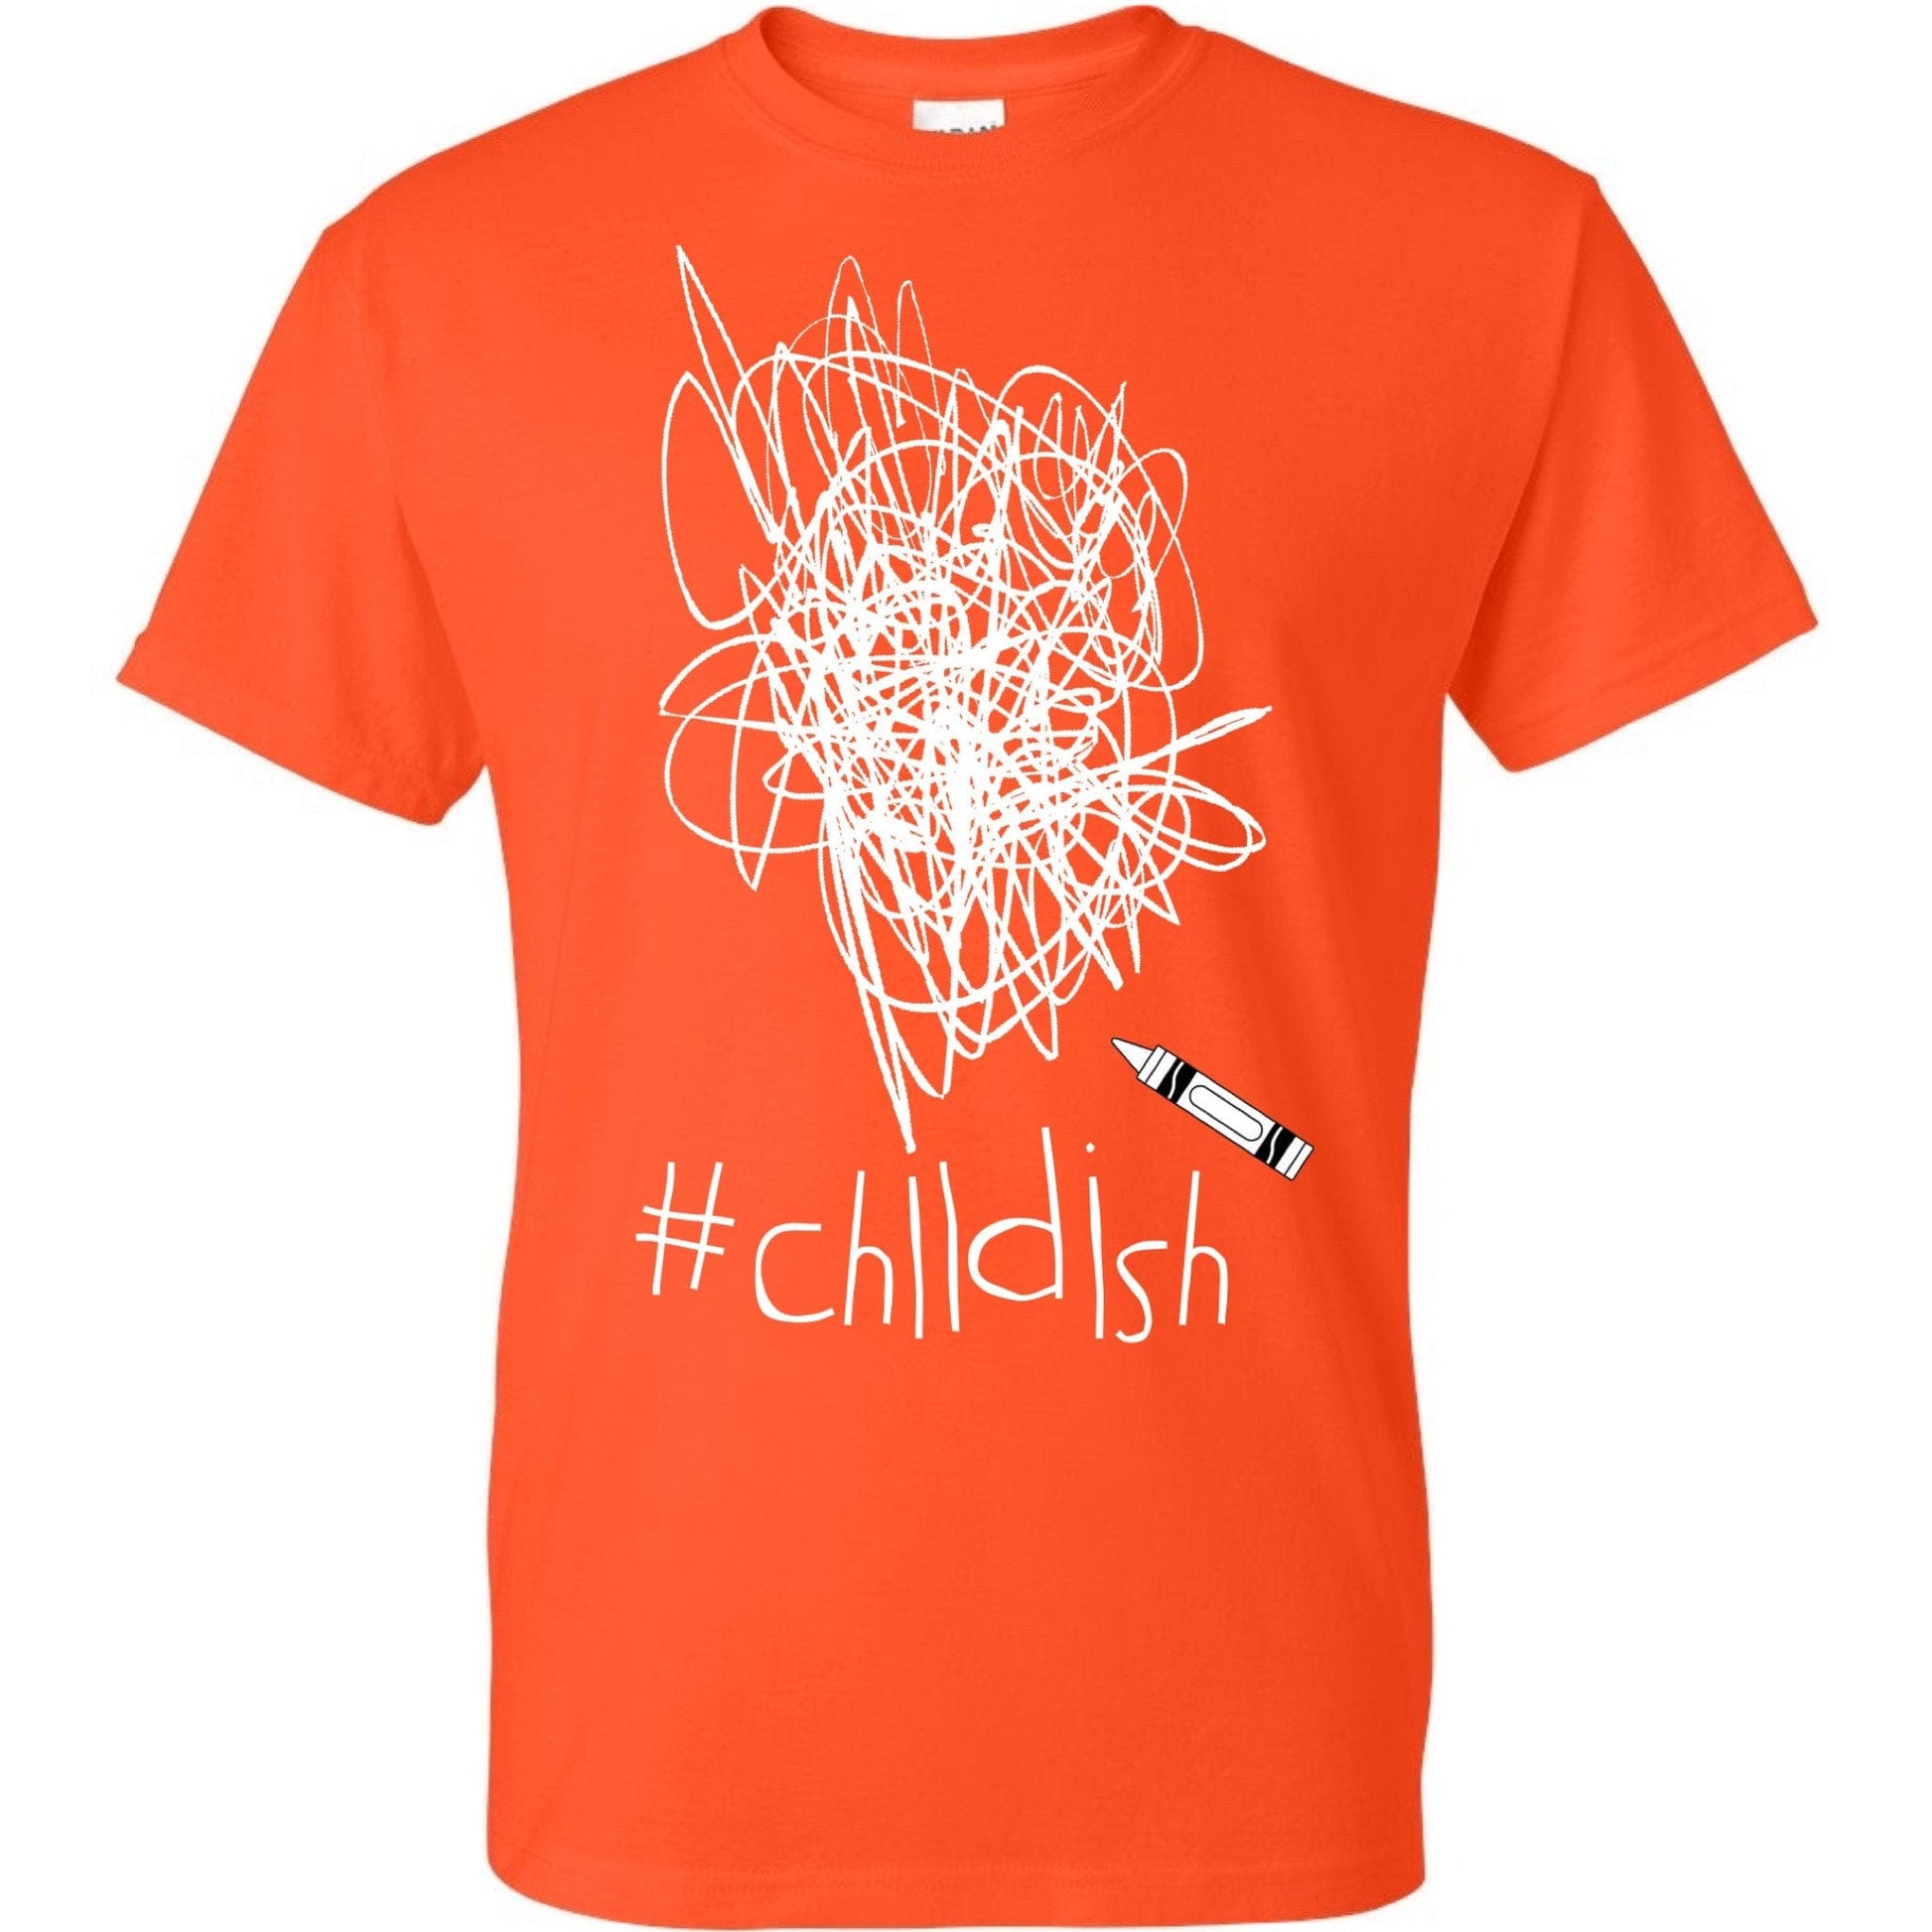 InsensitiviTees Shirts S / Orange #childish T-shirt